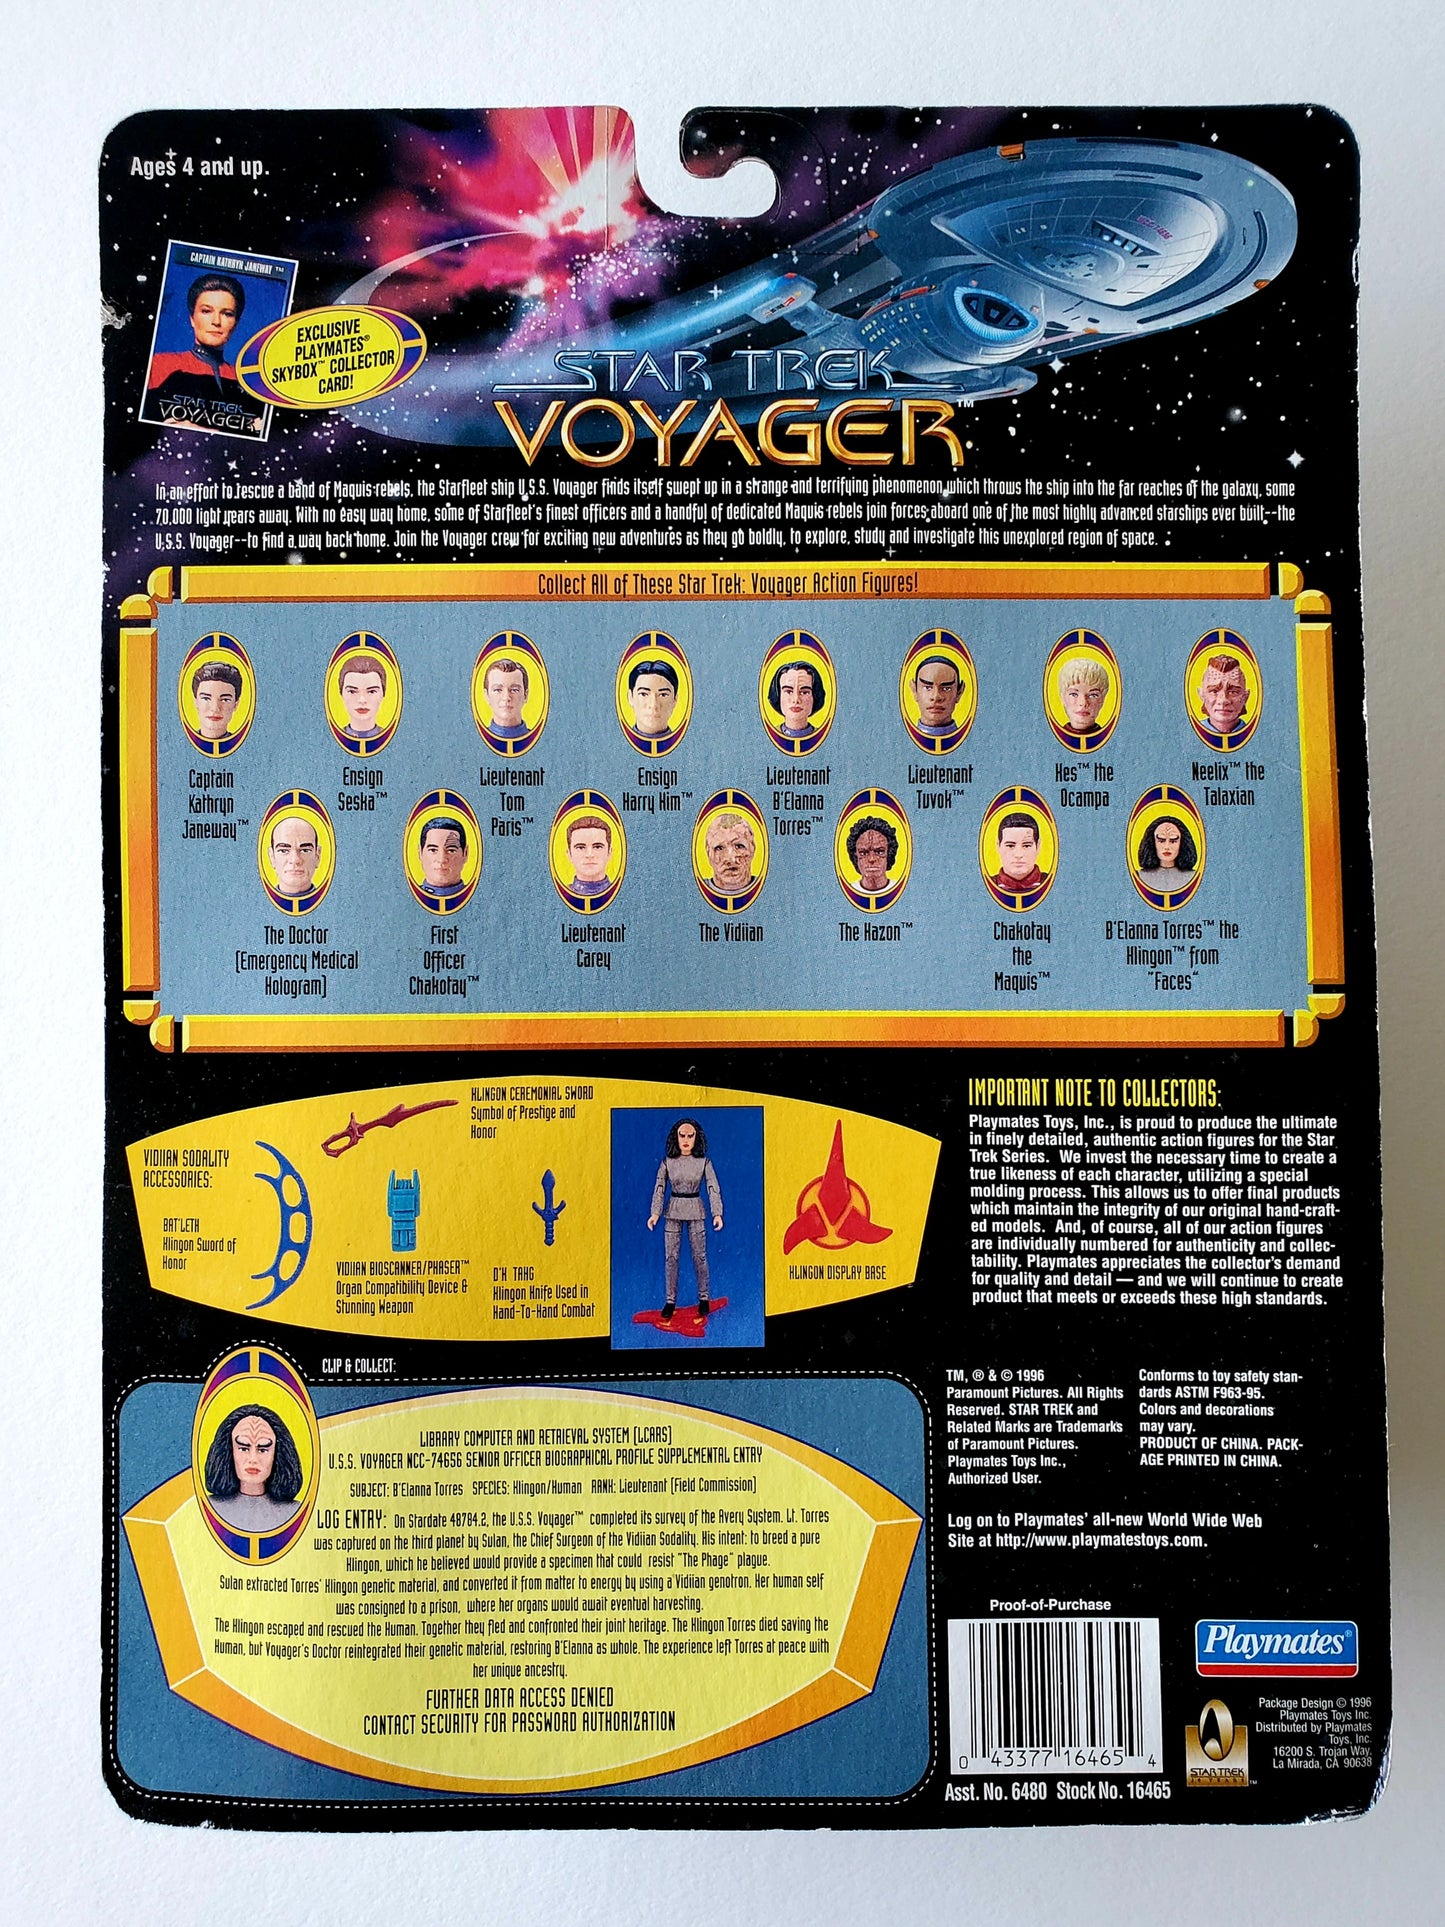 B'Elanna Torres the Klingon from the Star Trek: Voyager Episode "Faces"